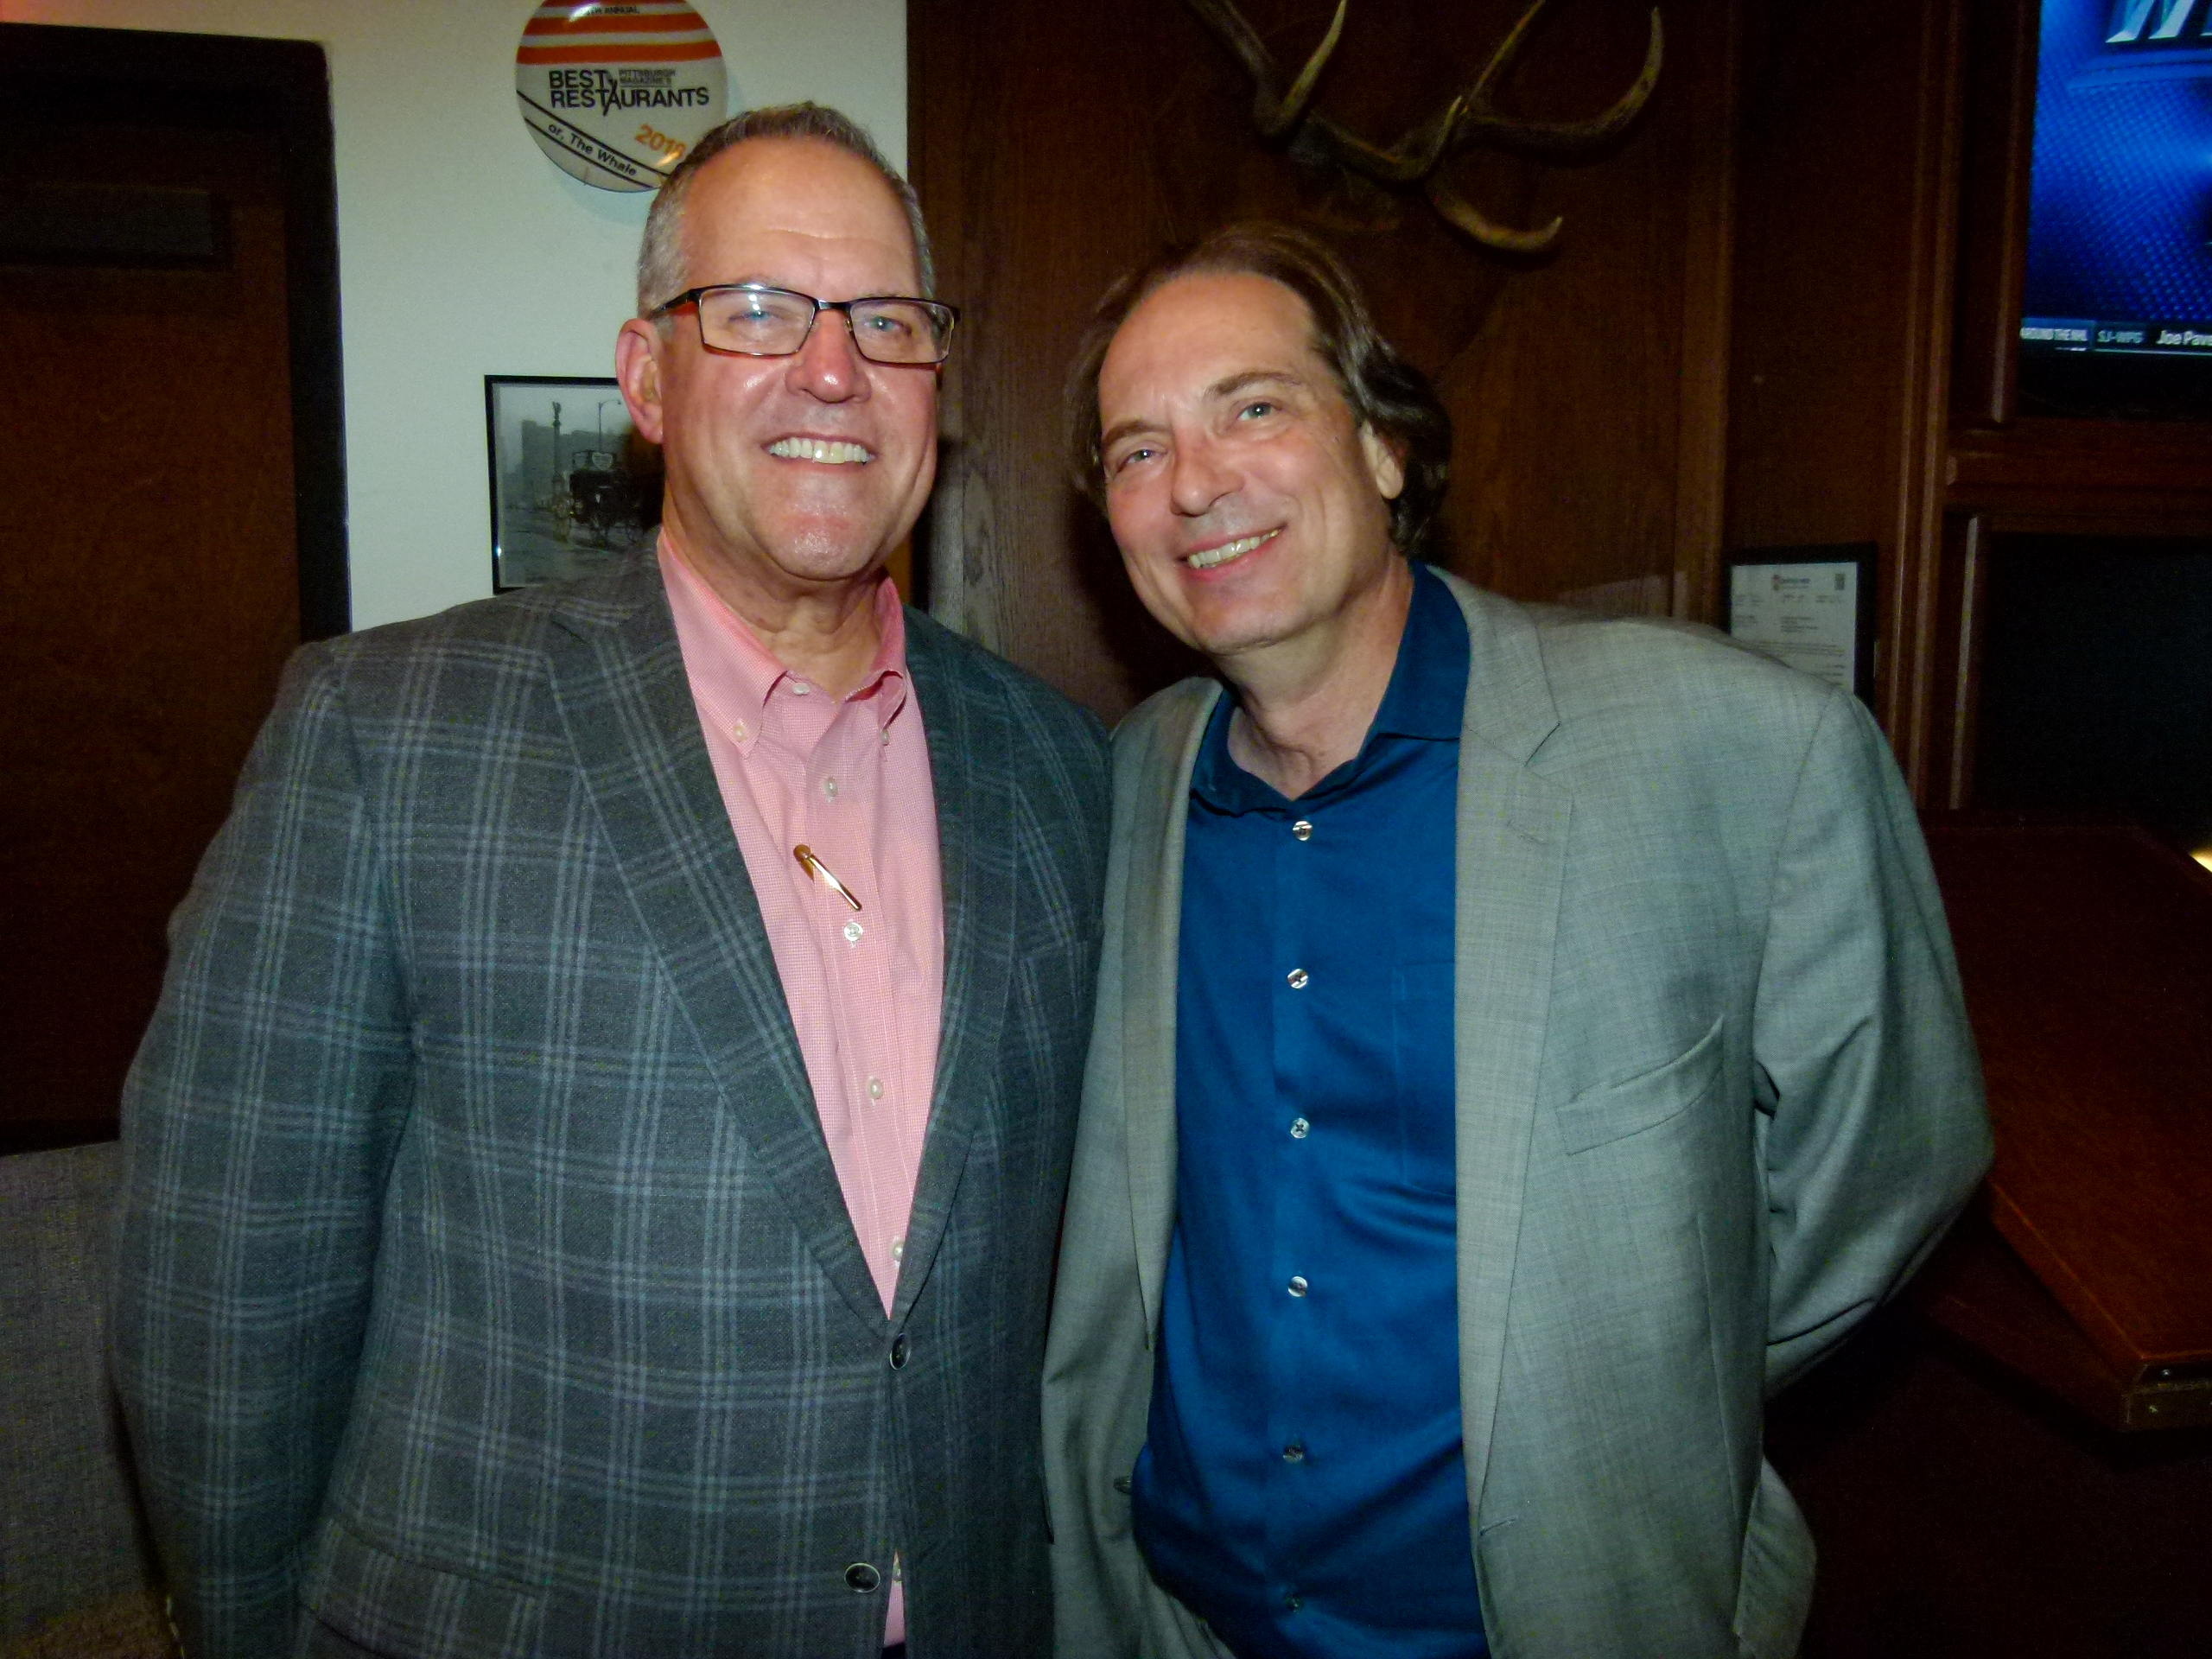 Mark De Intinis (Distrikt Hotel Pittsburgh GM) l., and Jim Graci (Program Director of NewsRadio 1020 KDKA and 93.7 The Fan) r.